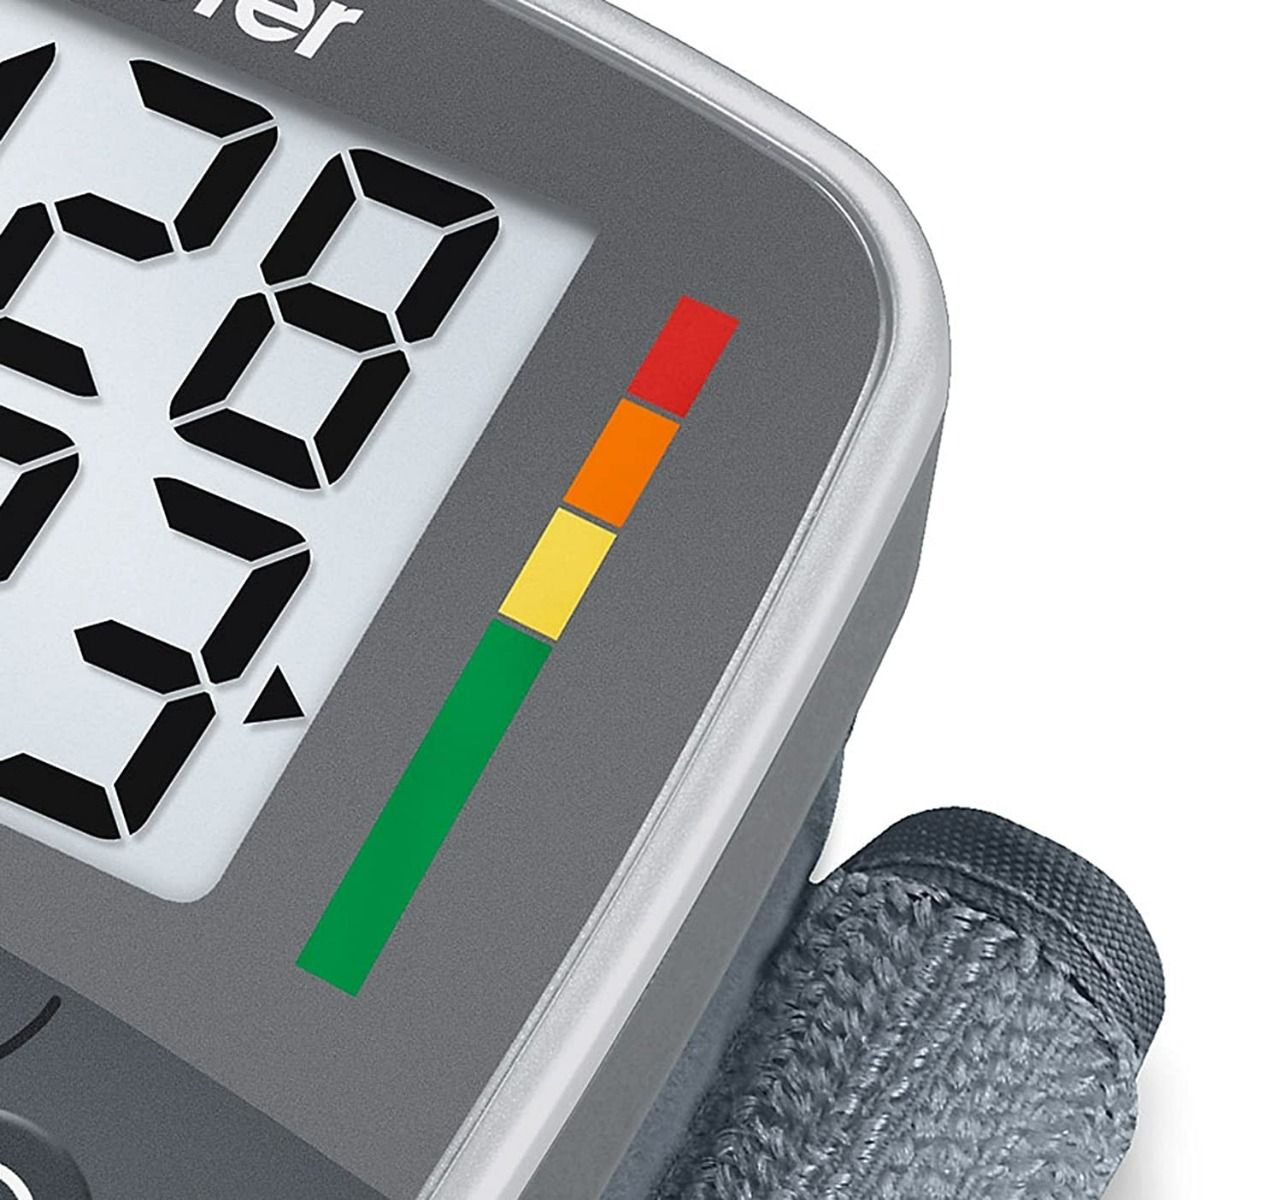 BC 32 Wrist Blood Pressure Monitor